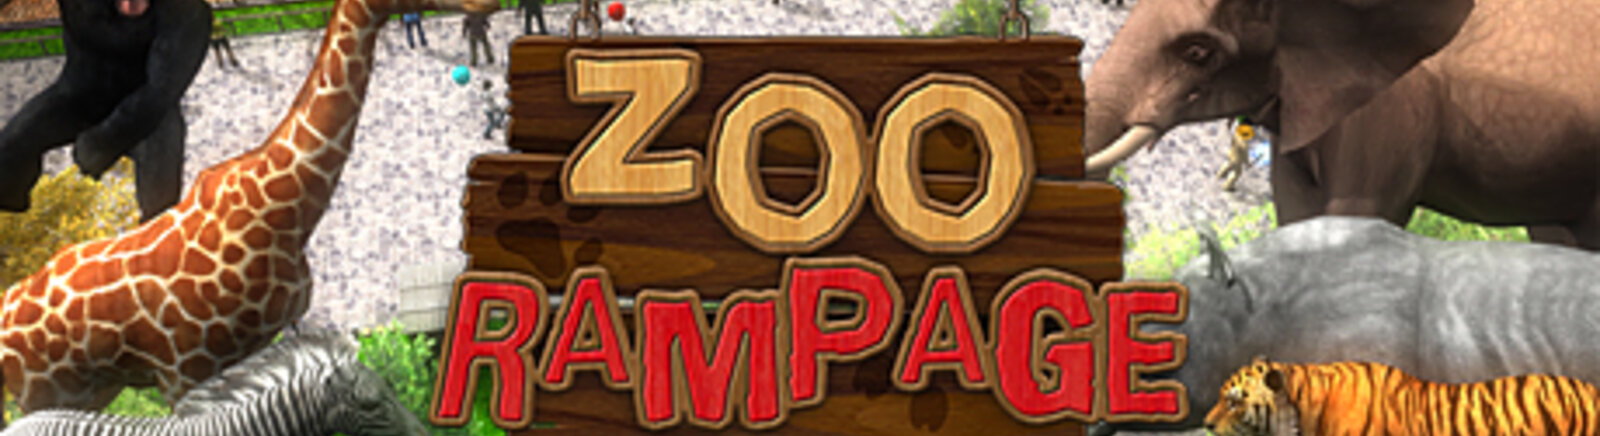 Дата выхода Zoo Rampage  на PC и Mac в России и во всем мире